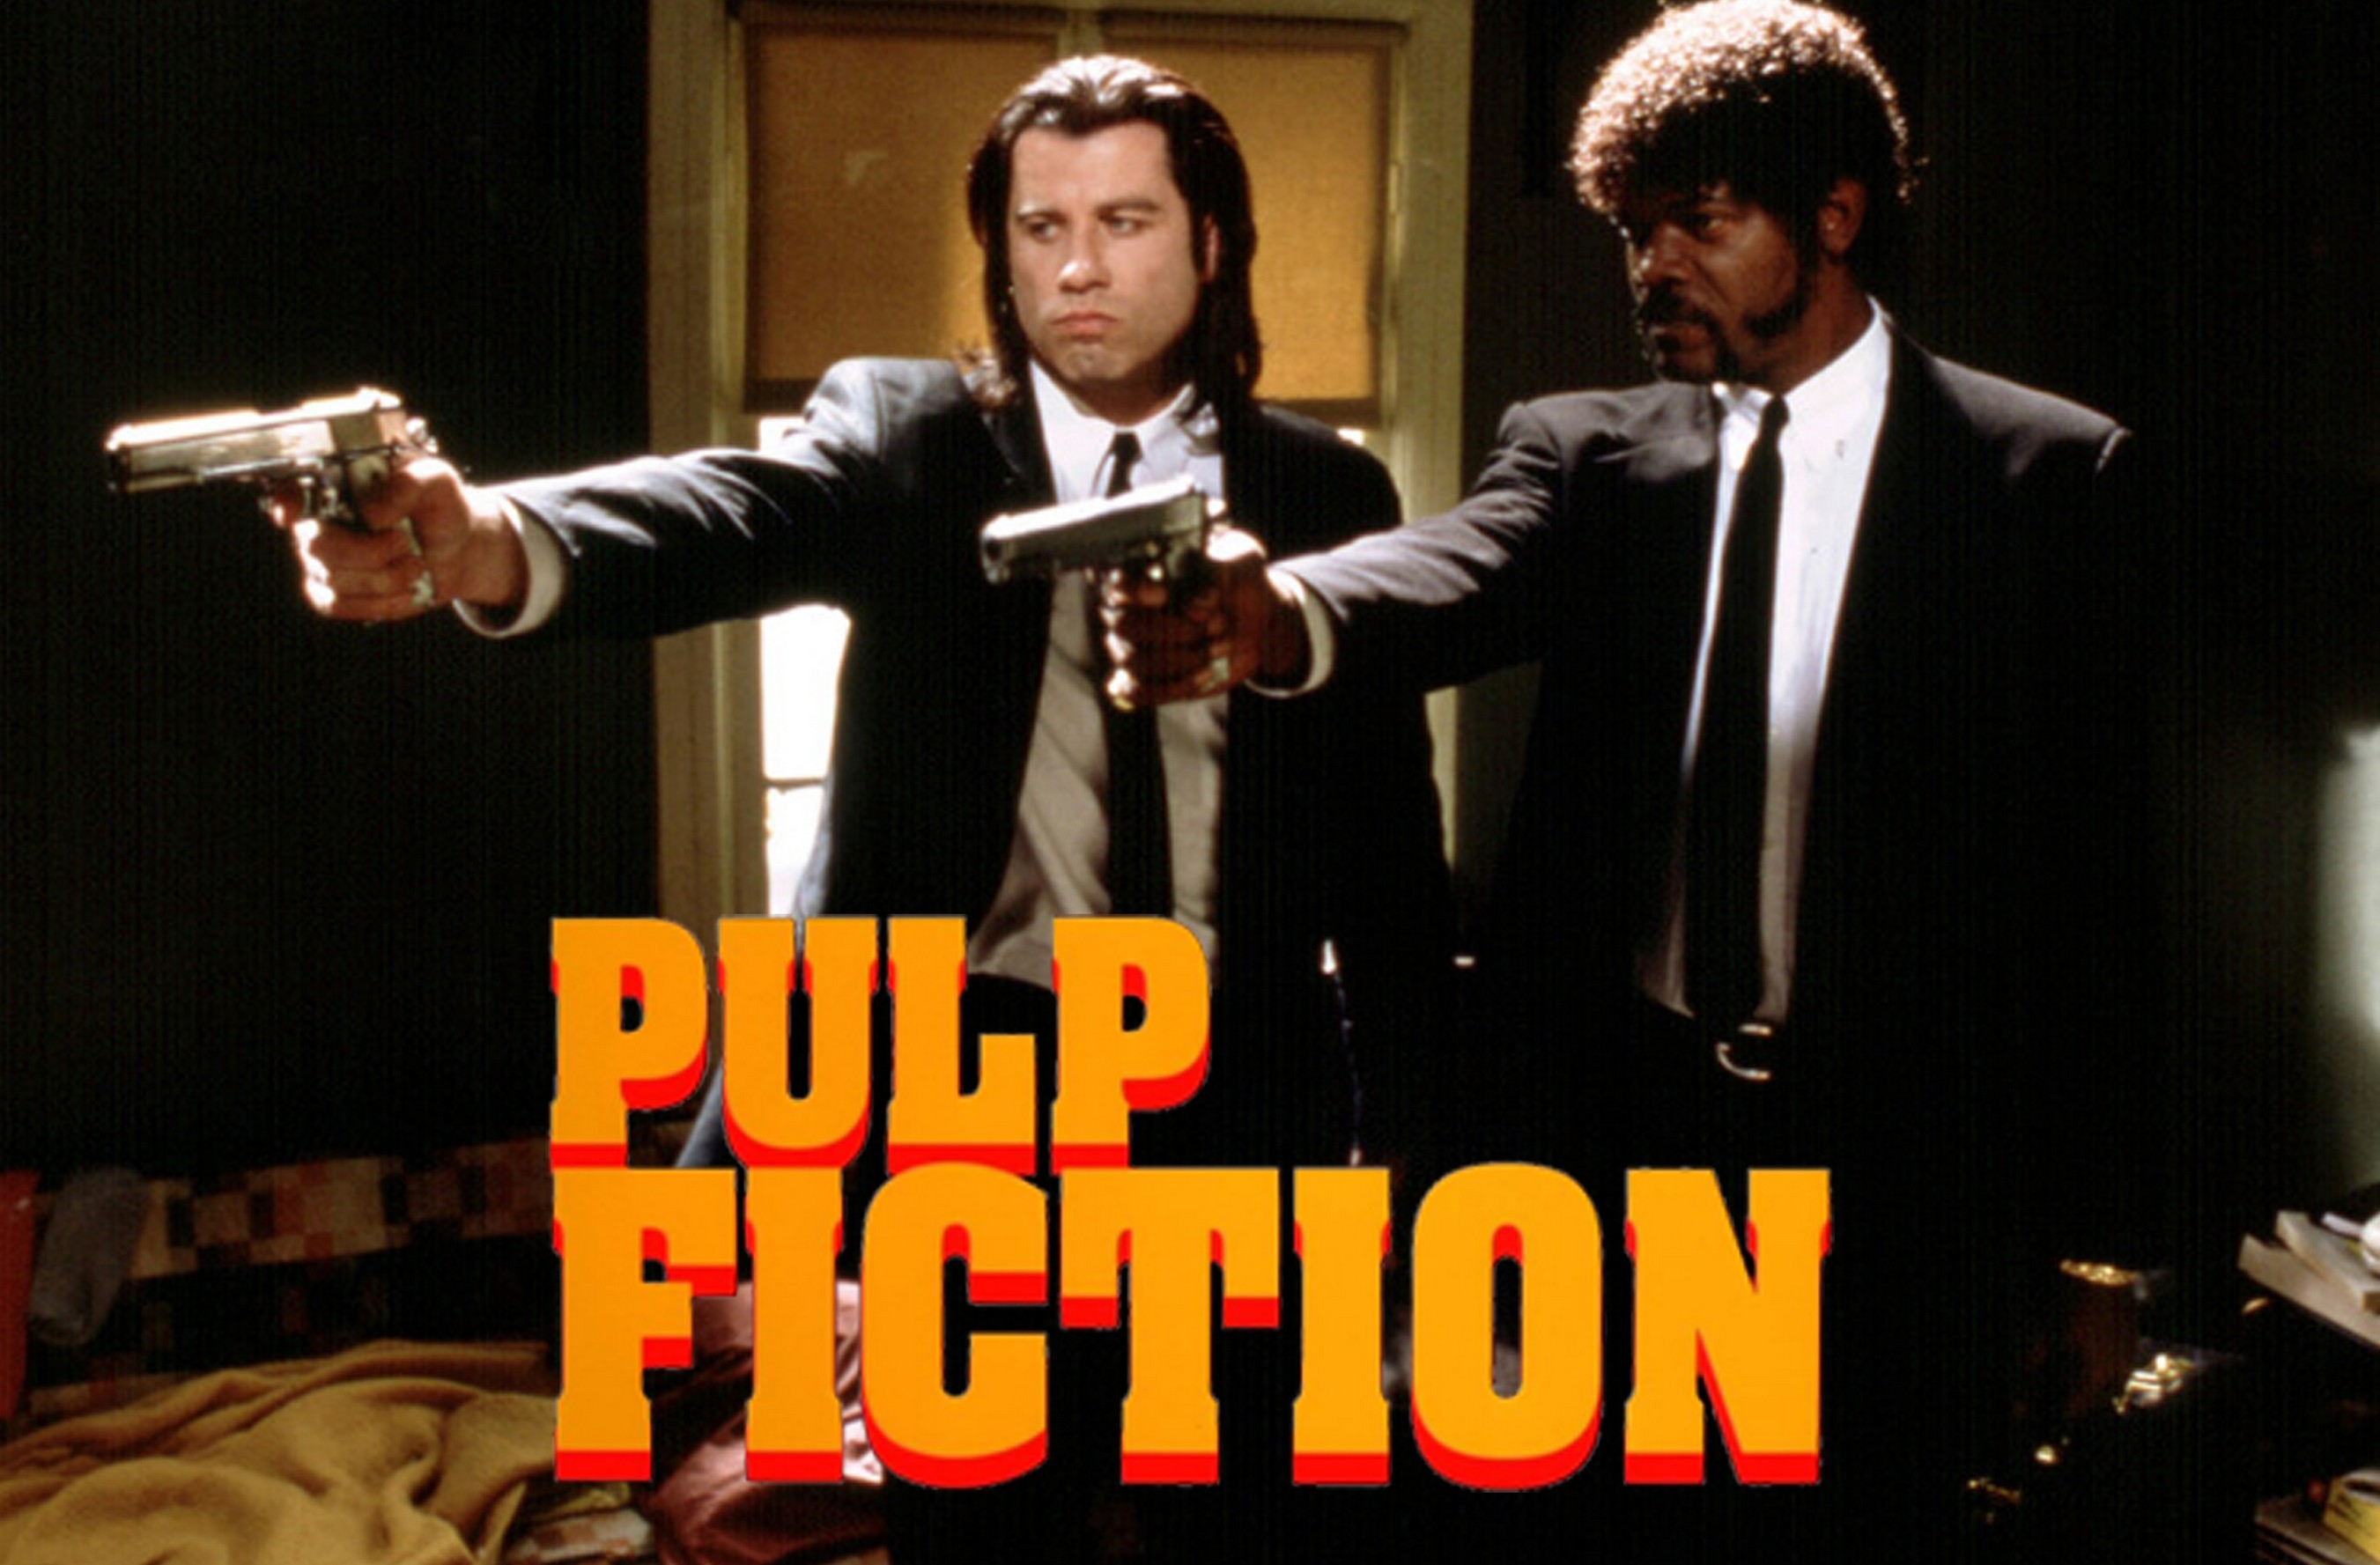 Samuel-L-Jackson-Pulp-Fiction-1994-Black-Perry-Ellis-Screen-Worn-Used-Movie-Prop-Hero-Suit-Jacket-Pants-W-COA-StarwearStatus-com_.jpg